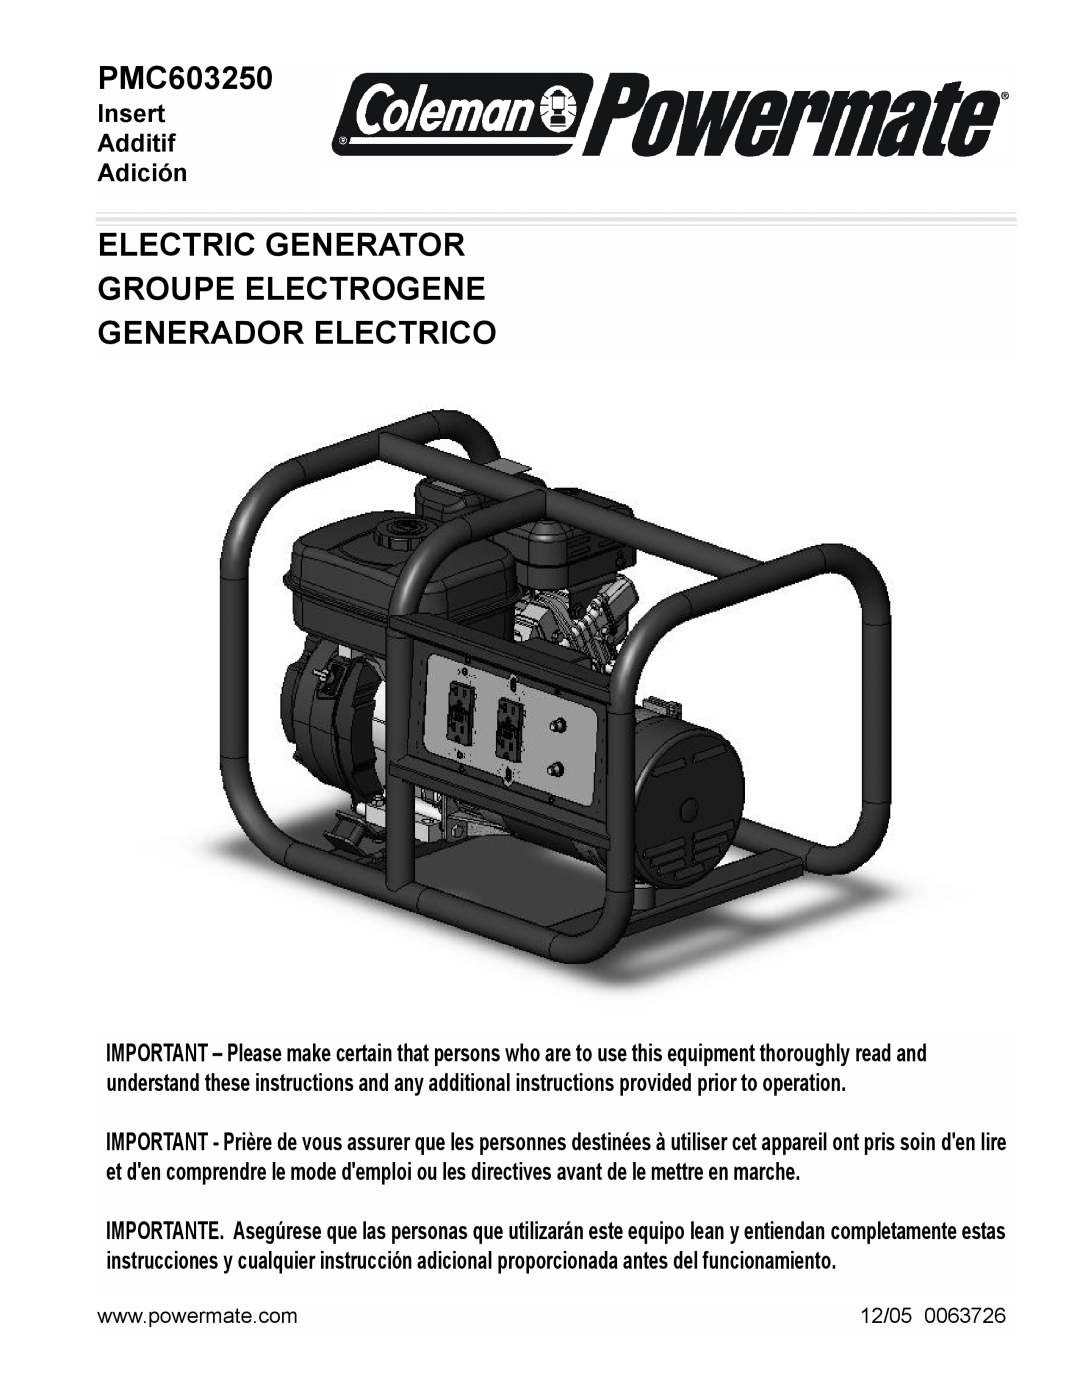 Powermate PMC603250 manual Electric Generator Groupe Electrogene, Generador Electrico, Insert Additif Adición, 12/05 